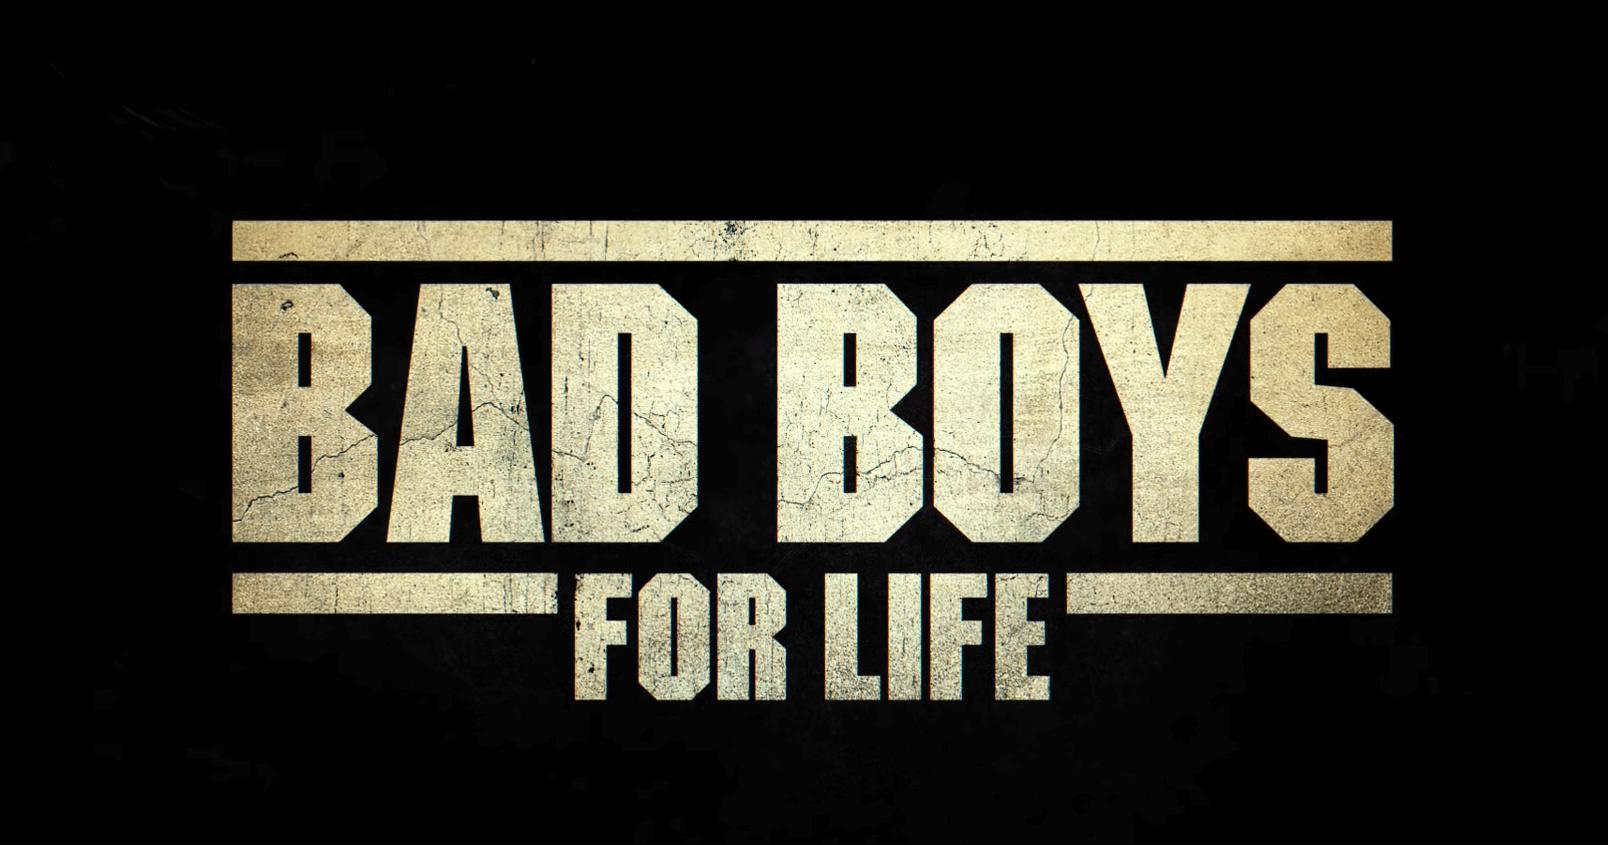 bad boys full movie